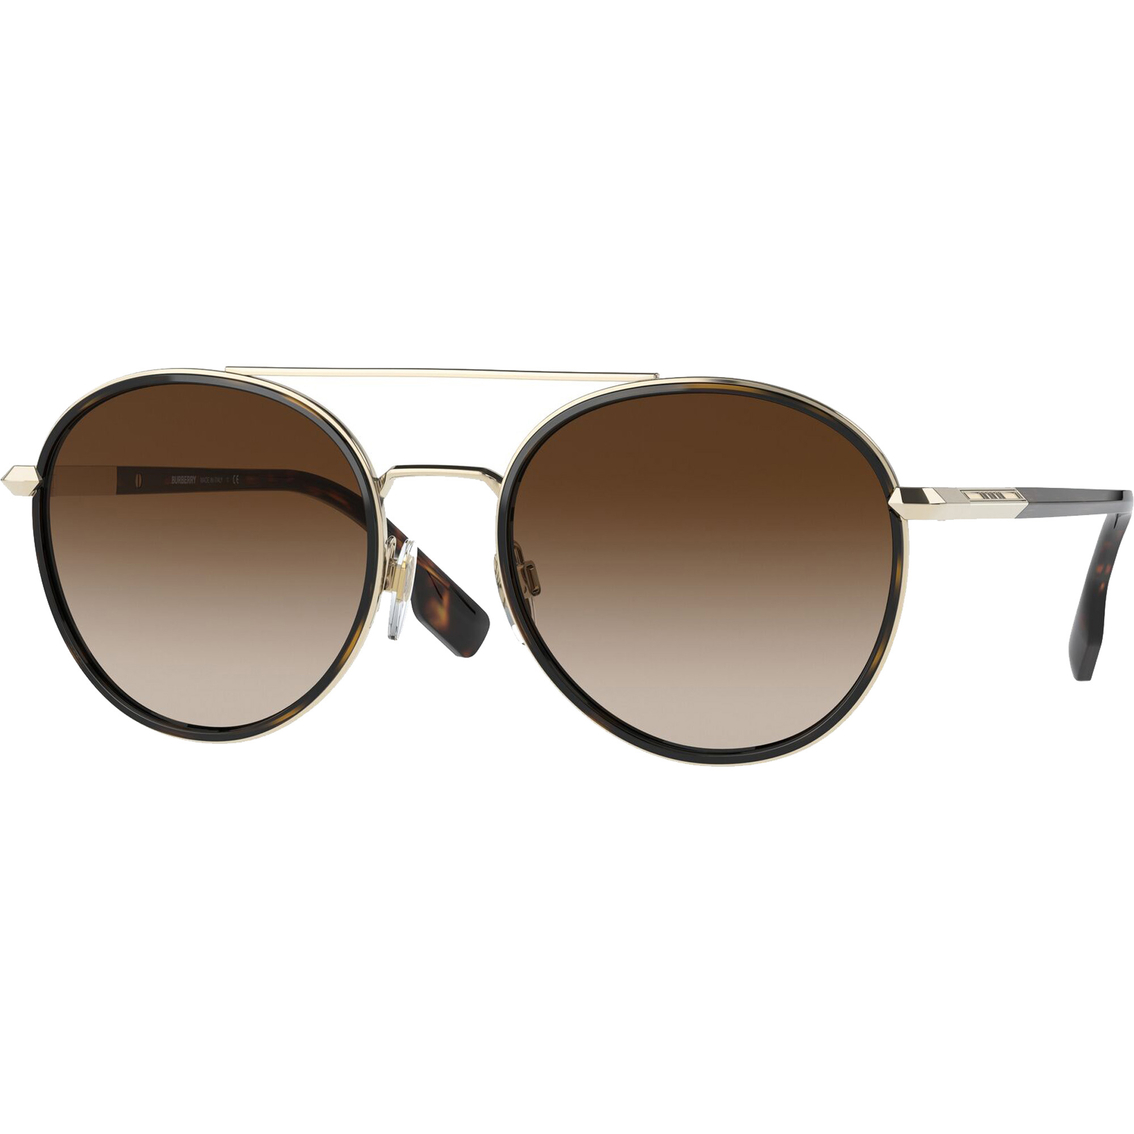 Burberry Ivy Sunglasses 0be3131 | Women's Sunglasses | Clothing ...